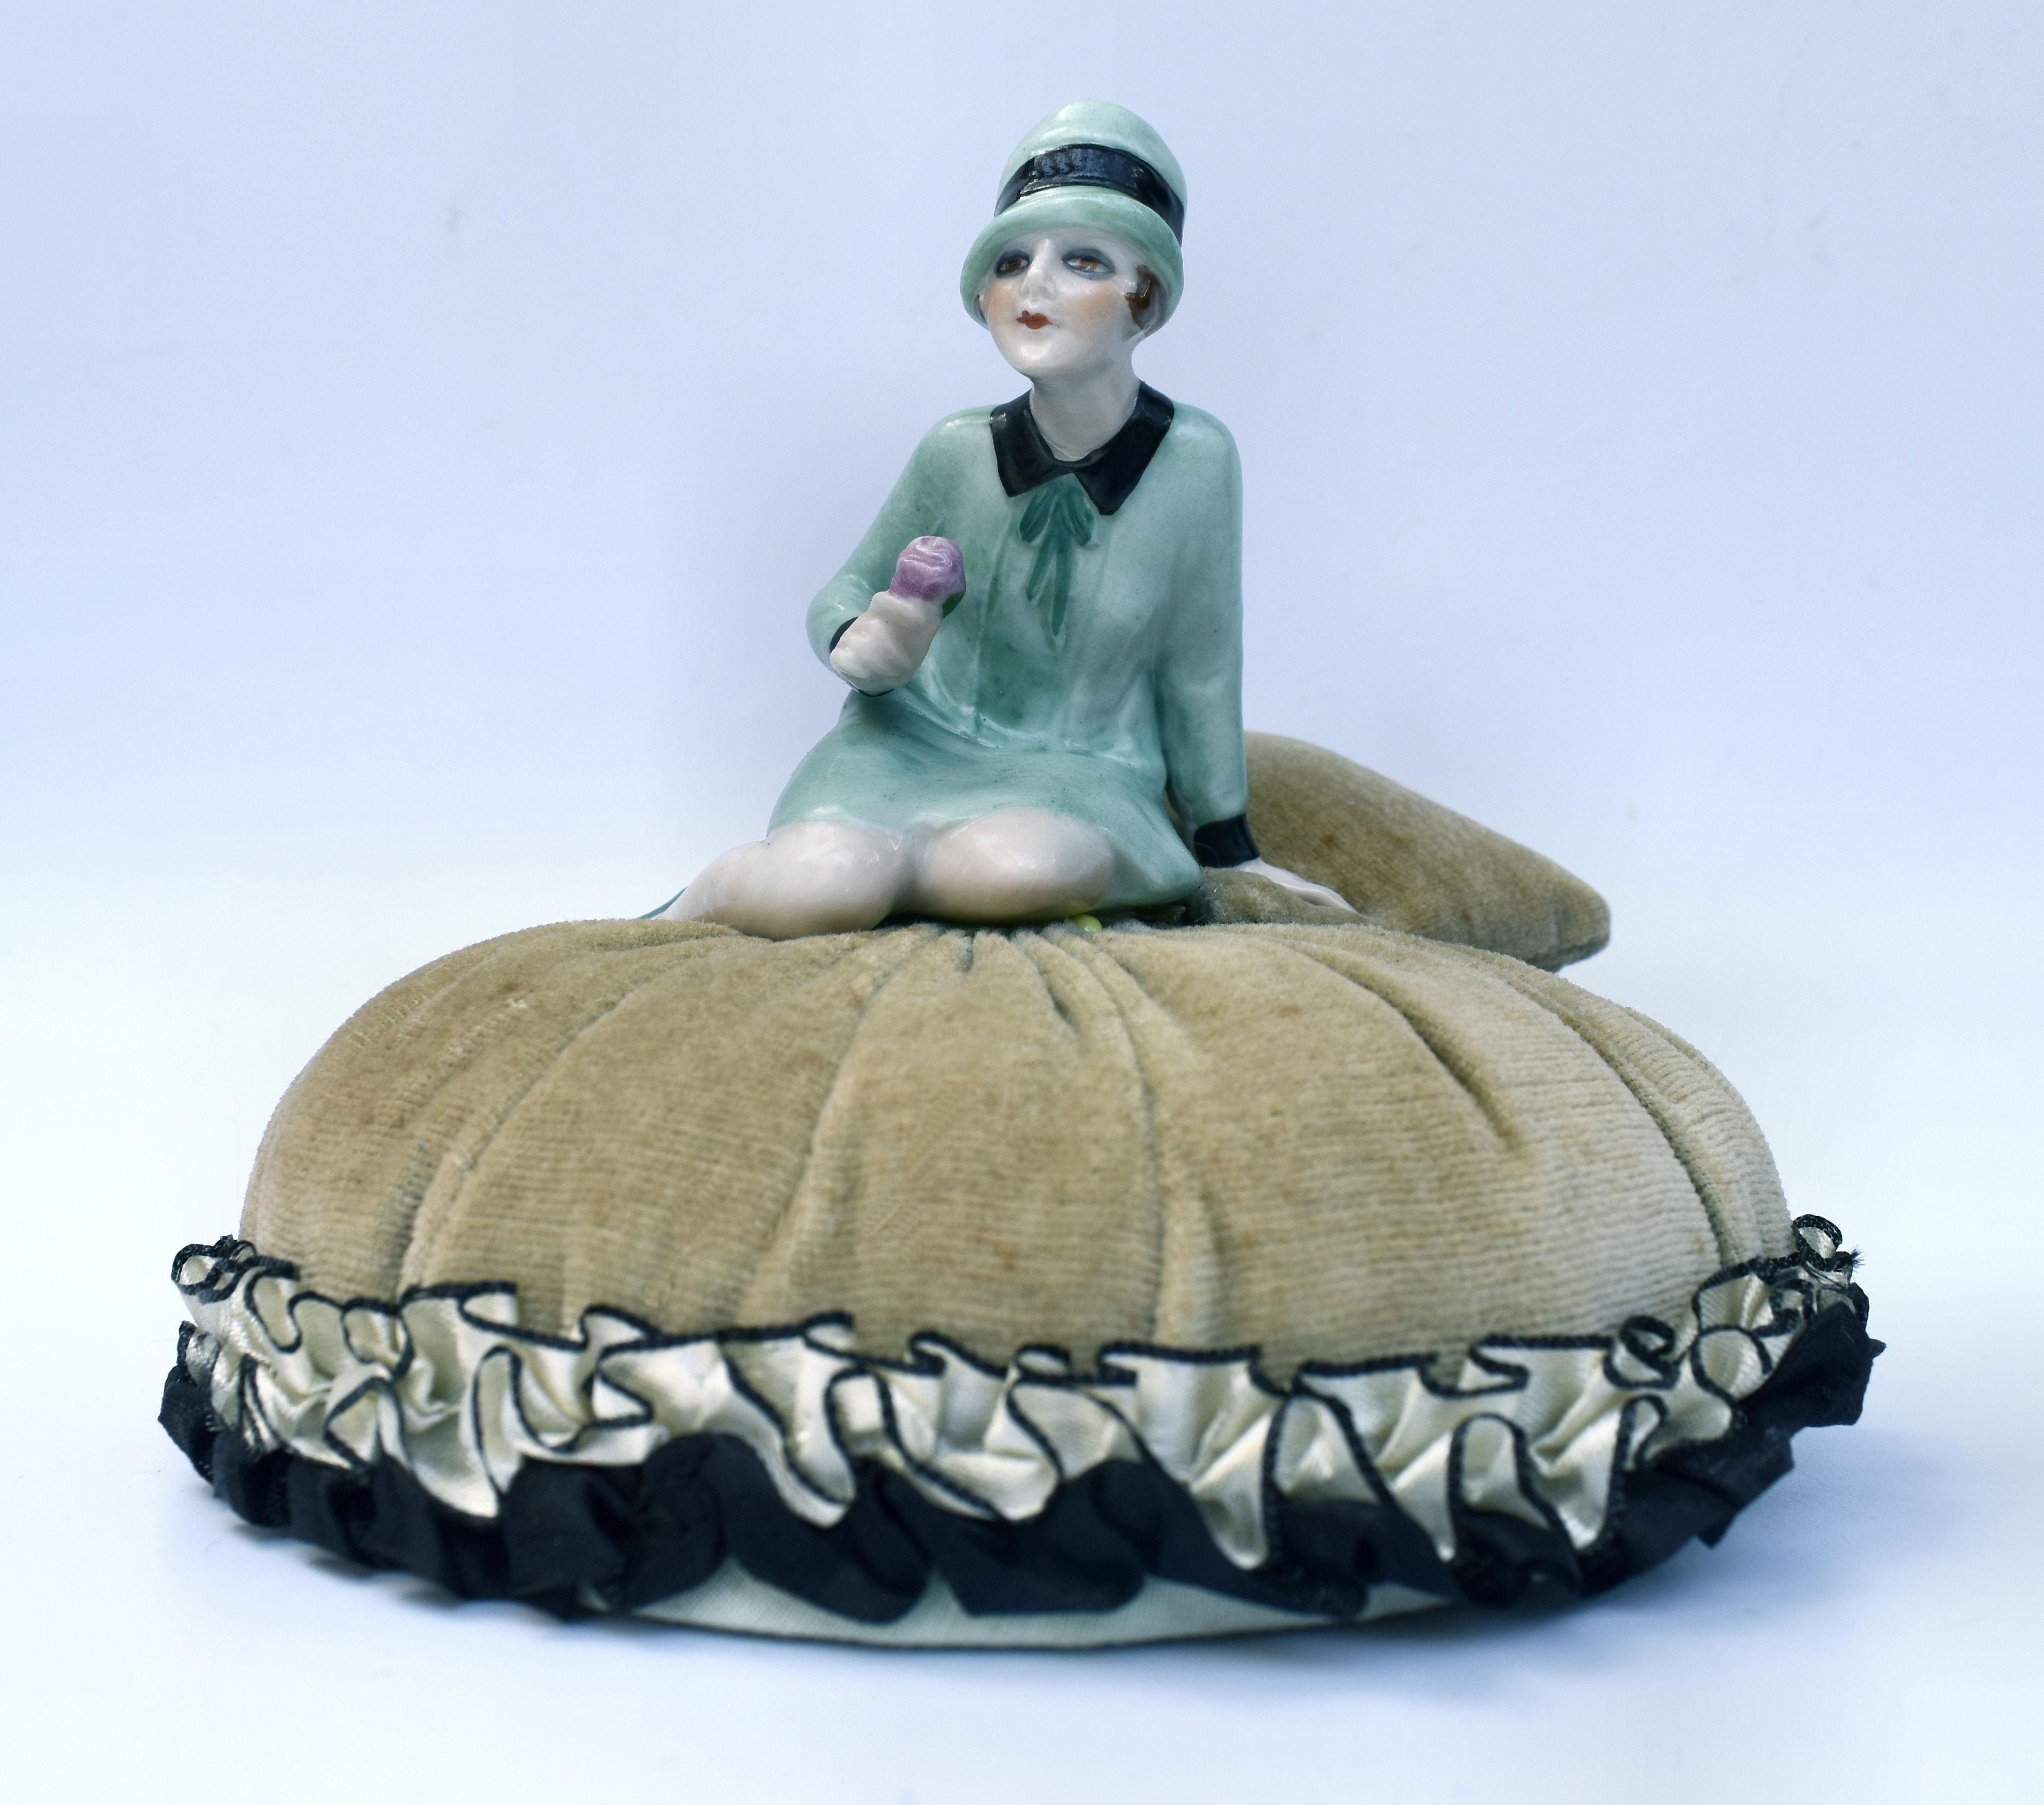 20th Century Art Deco Rare Pin Cushion Doll by Fasold & Stuach, c1930 For Sale